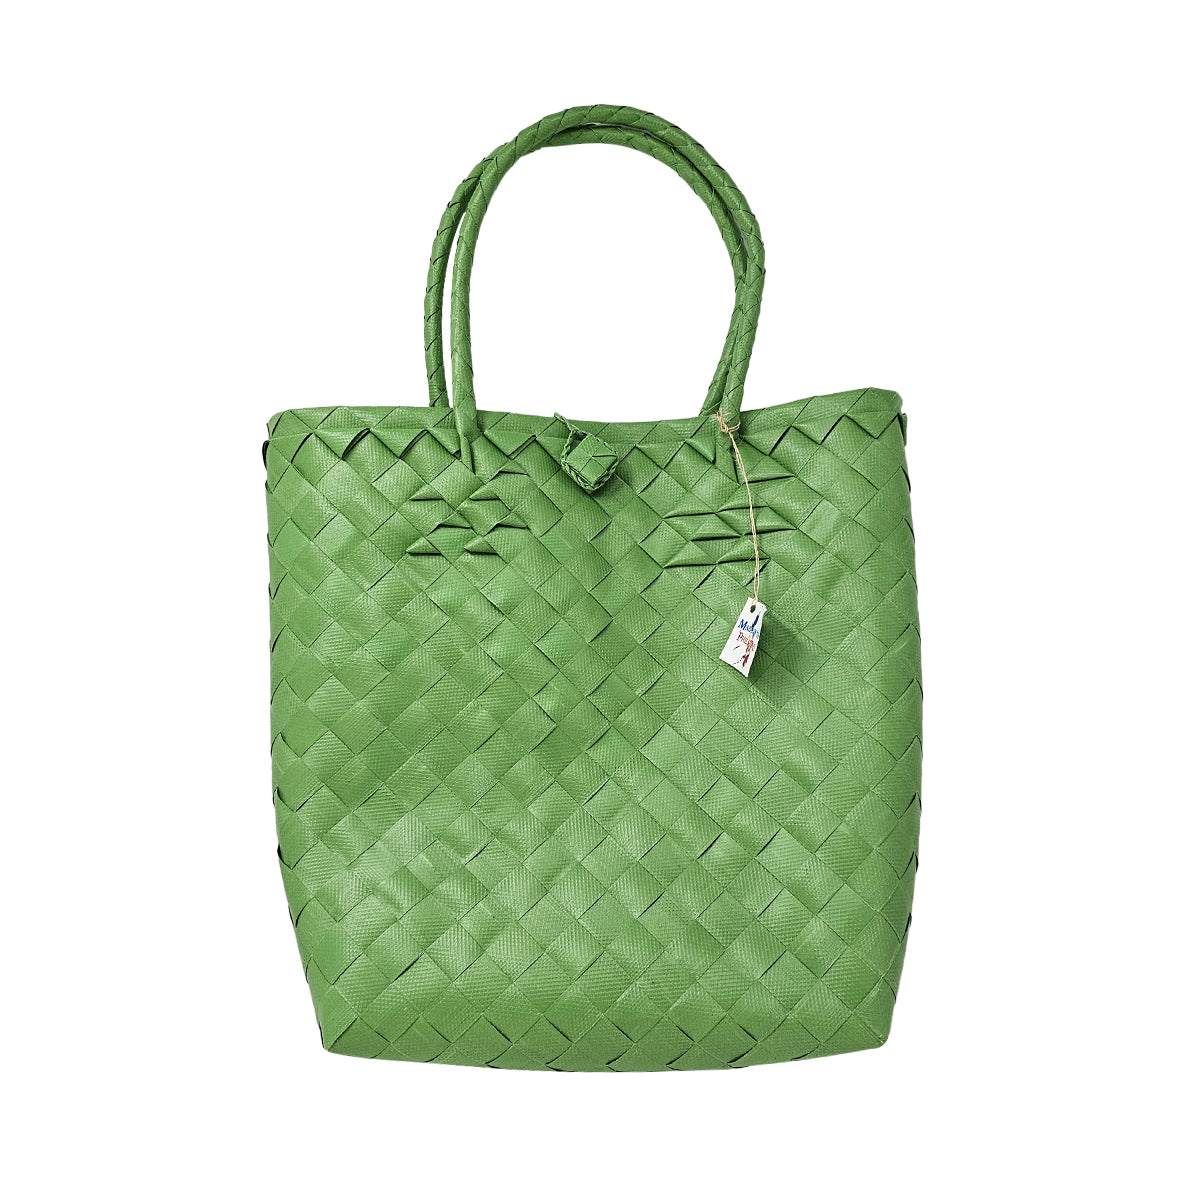 Misenka Handicrafts Philippine Bayong Moss Green Go Bag - SALE 50% OFF